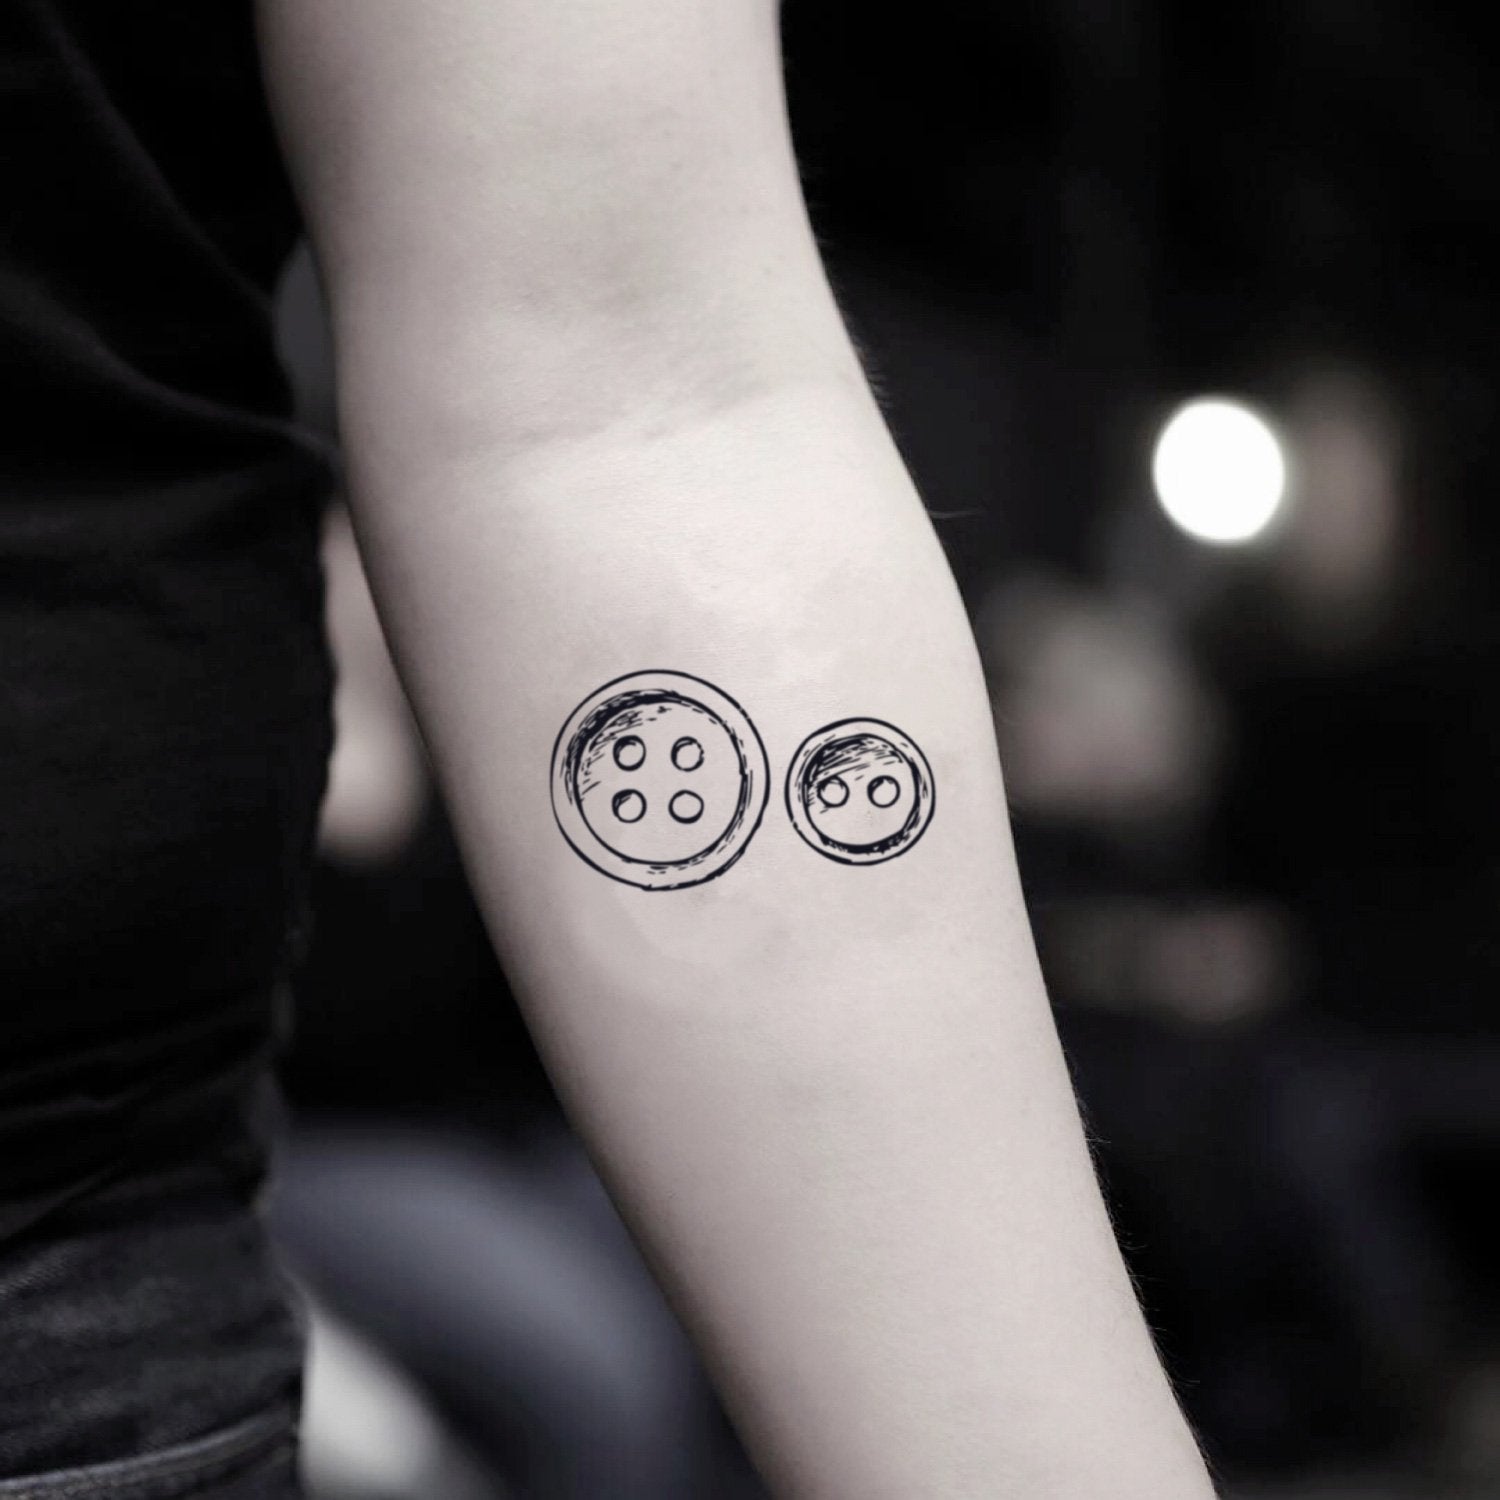 fake small button minimalist temporary tattoo sticker design idea on inner arm